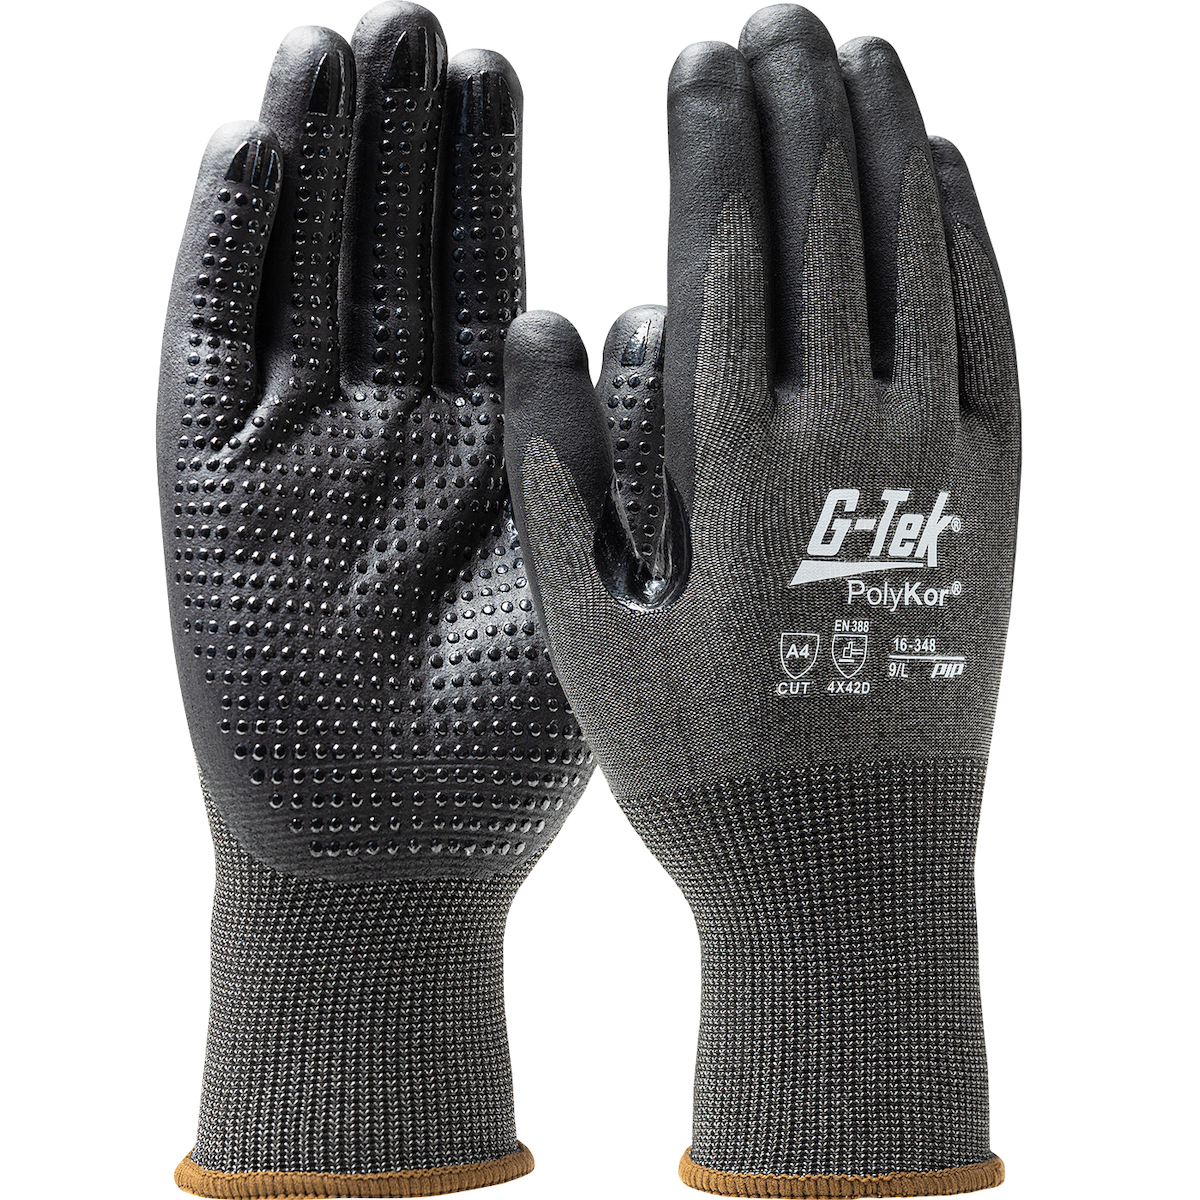 G-TEK POLYKOR 16-348 DOTTED FOAM NITRILE - Cut Resistant Gloves